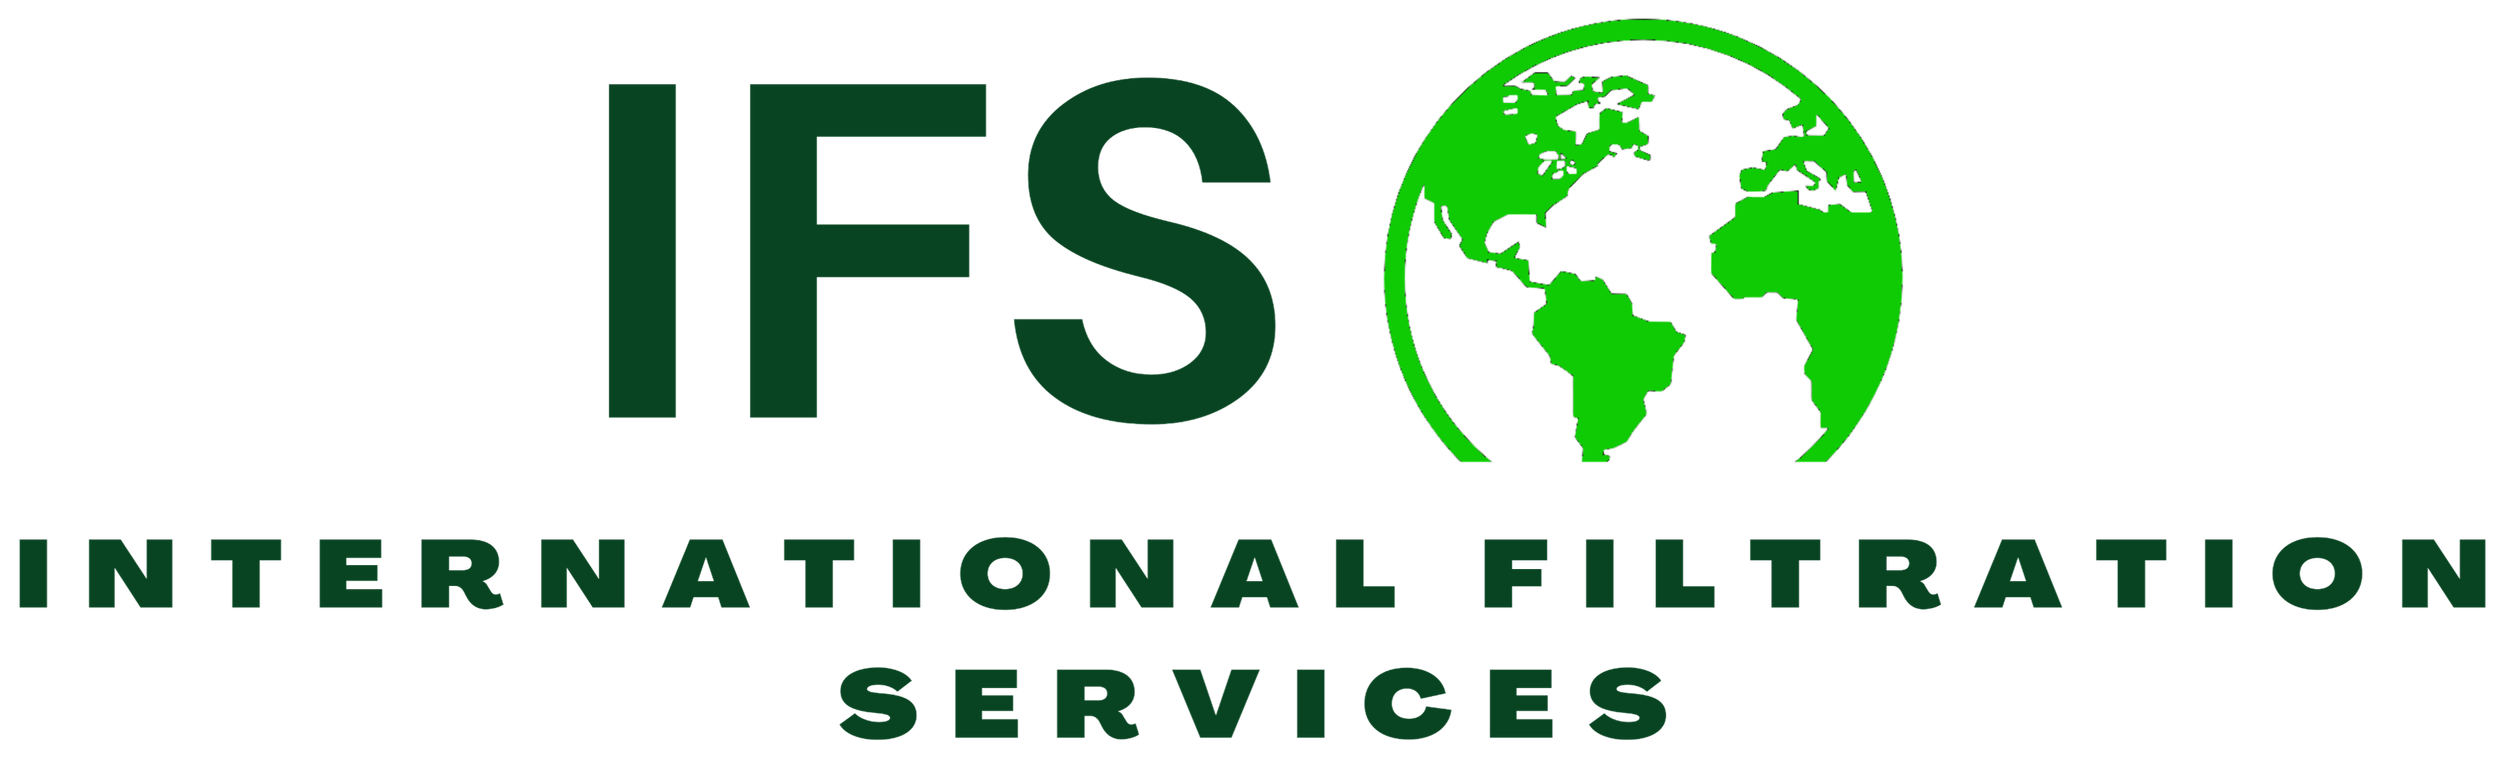 International Filtration Services